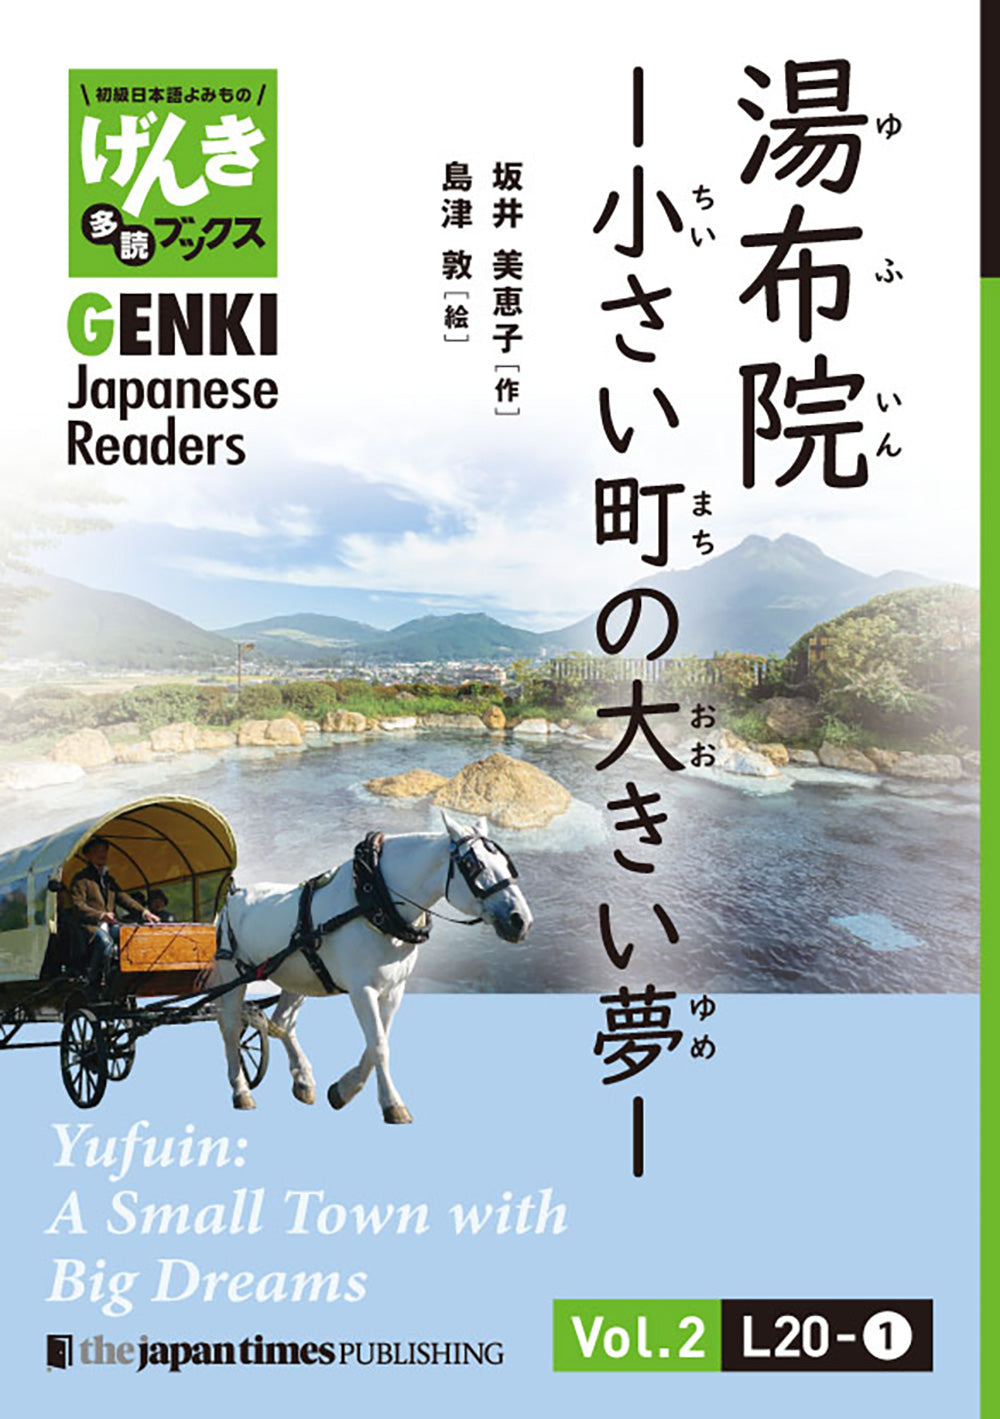 GENKI Japanese Readers Box 4 (L19-L23)